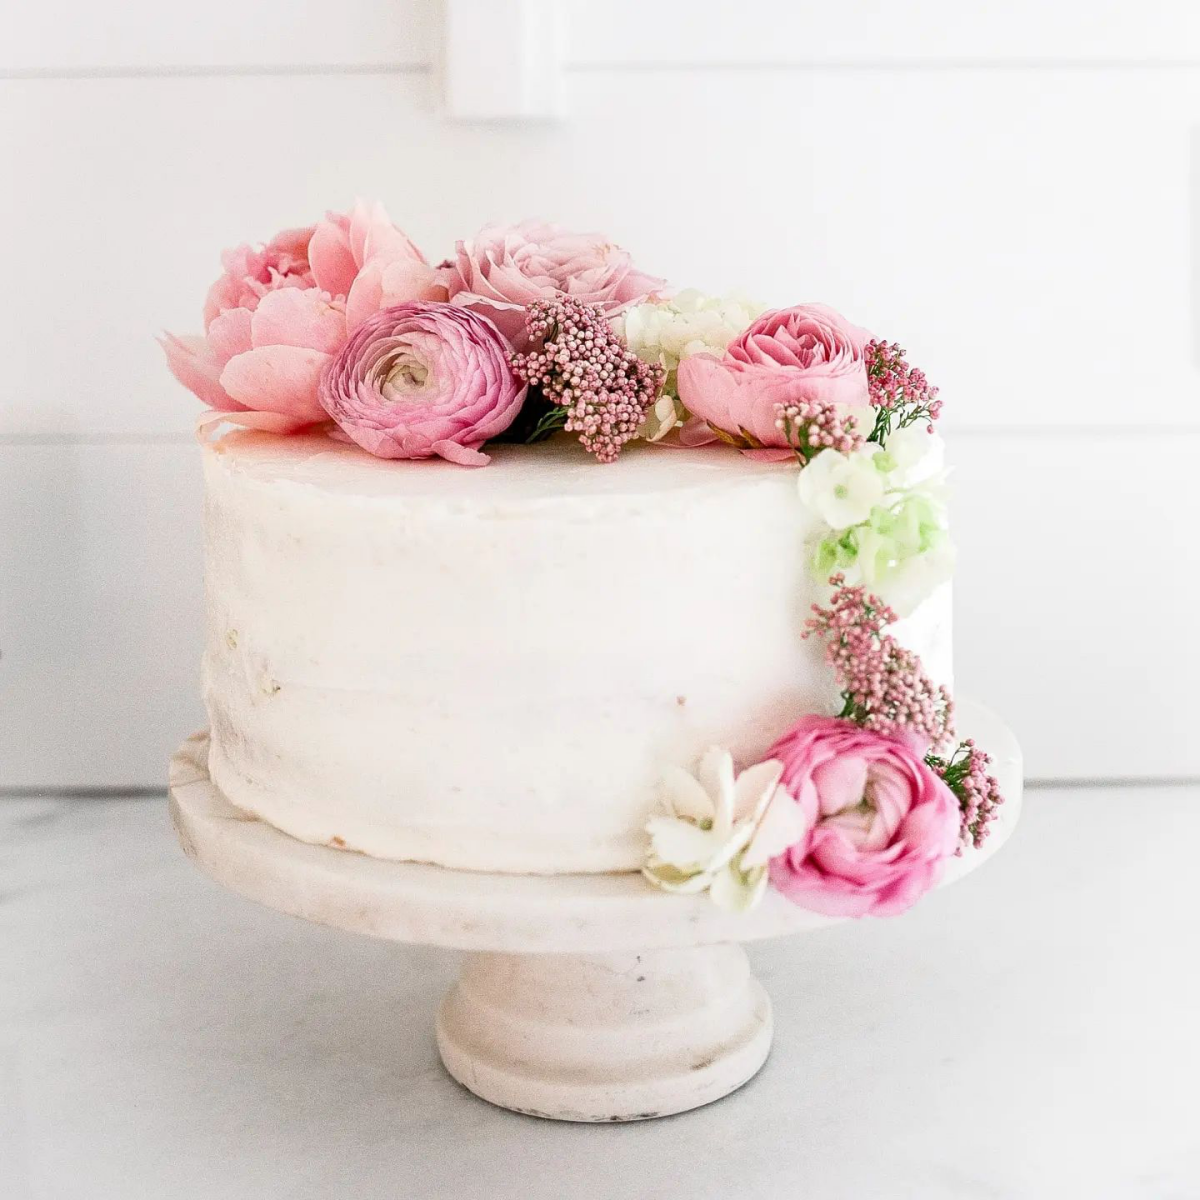 minimalistic cake with flowers